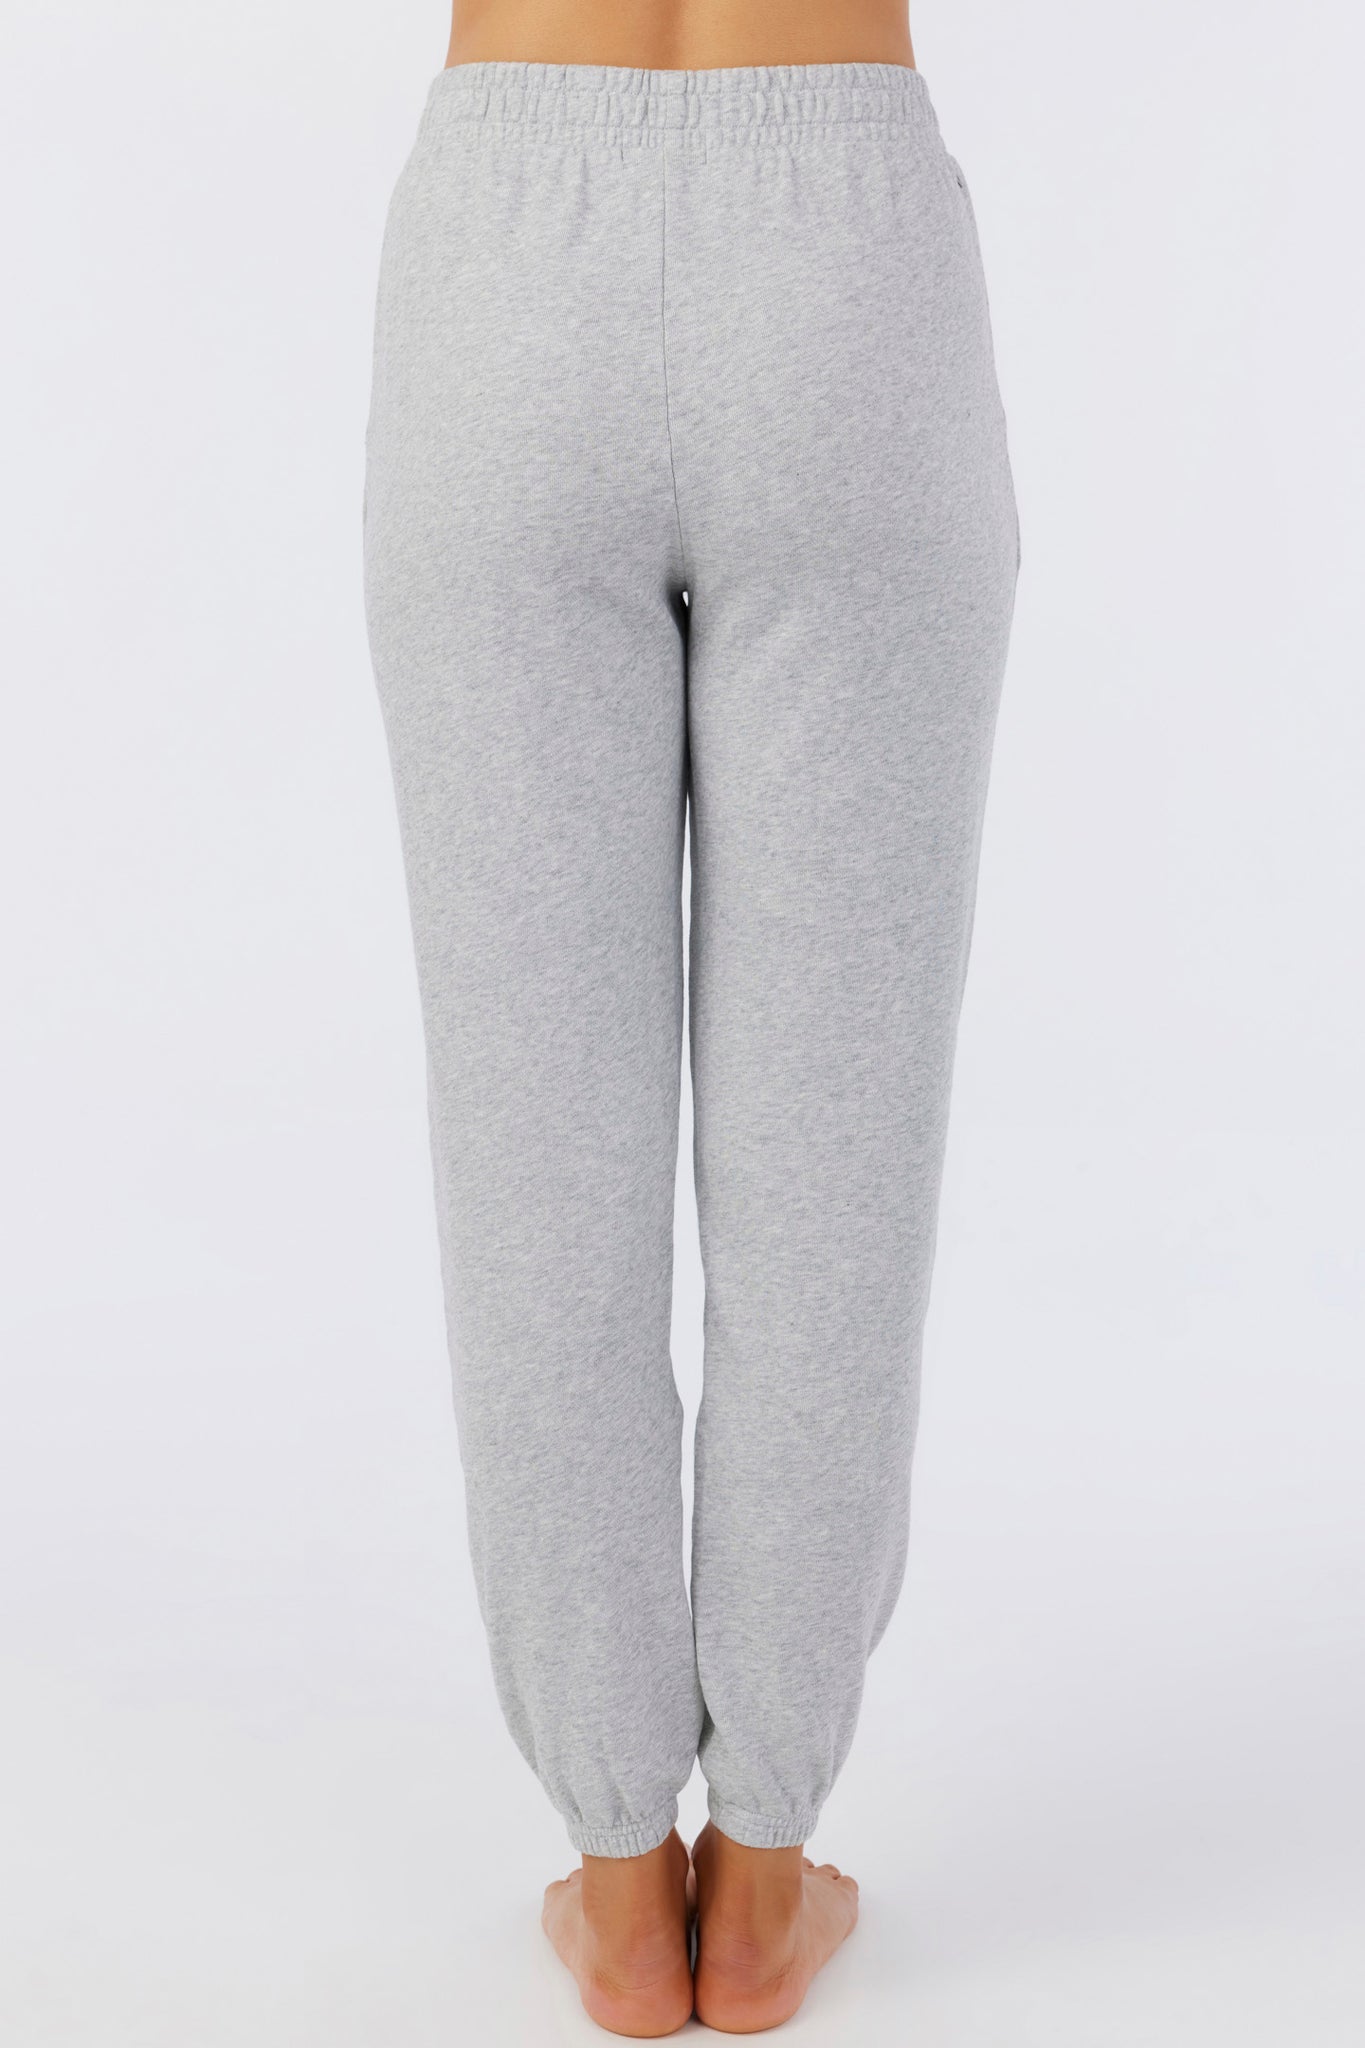  GWNWTT Women's Sweatpants Heather Gray Stacked Pants